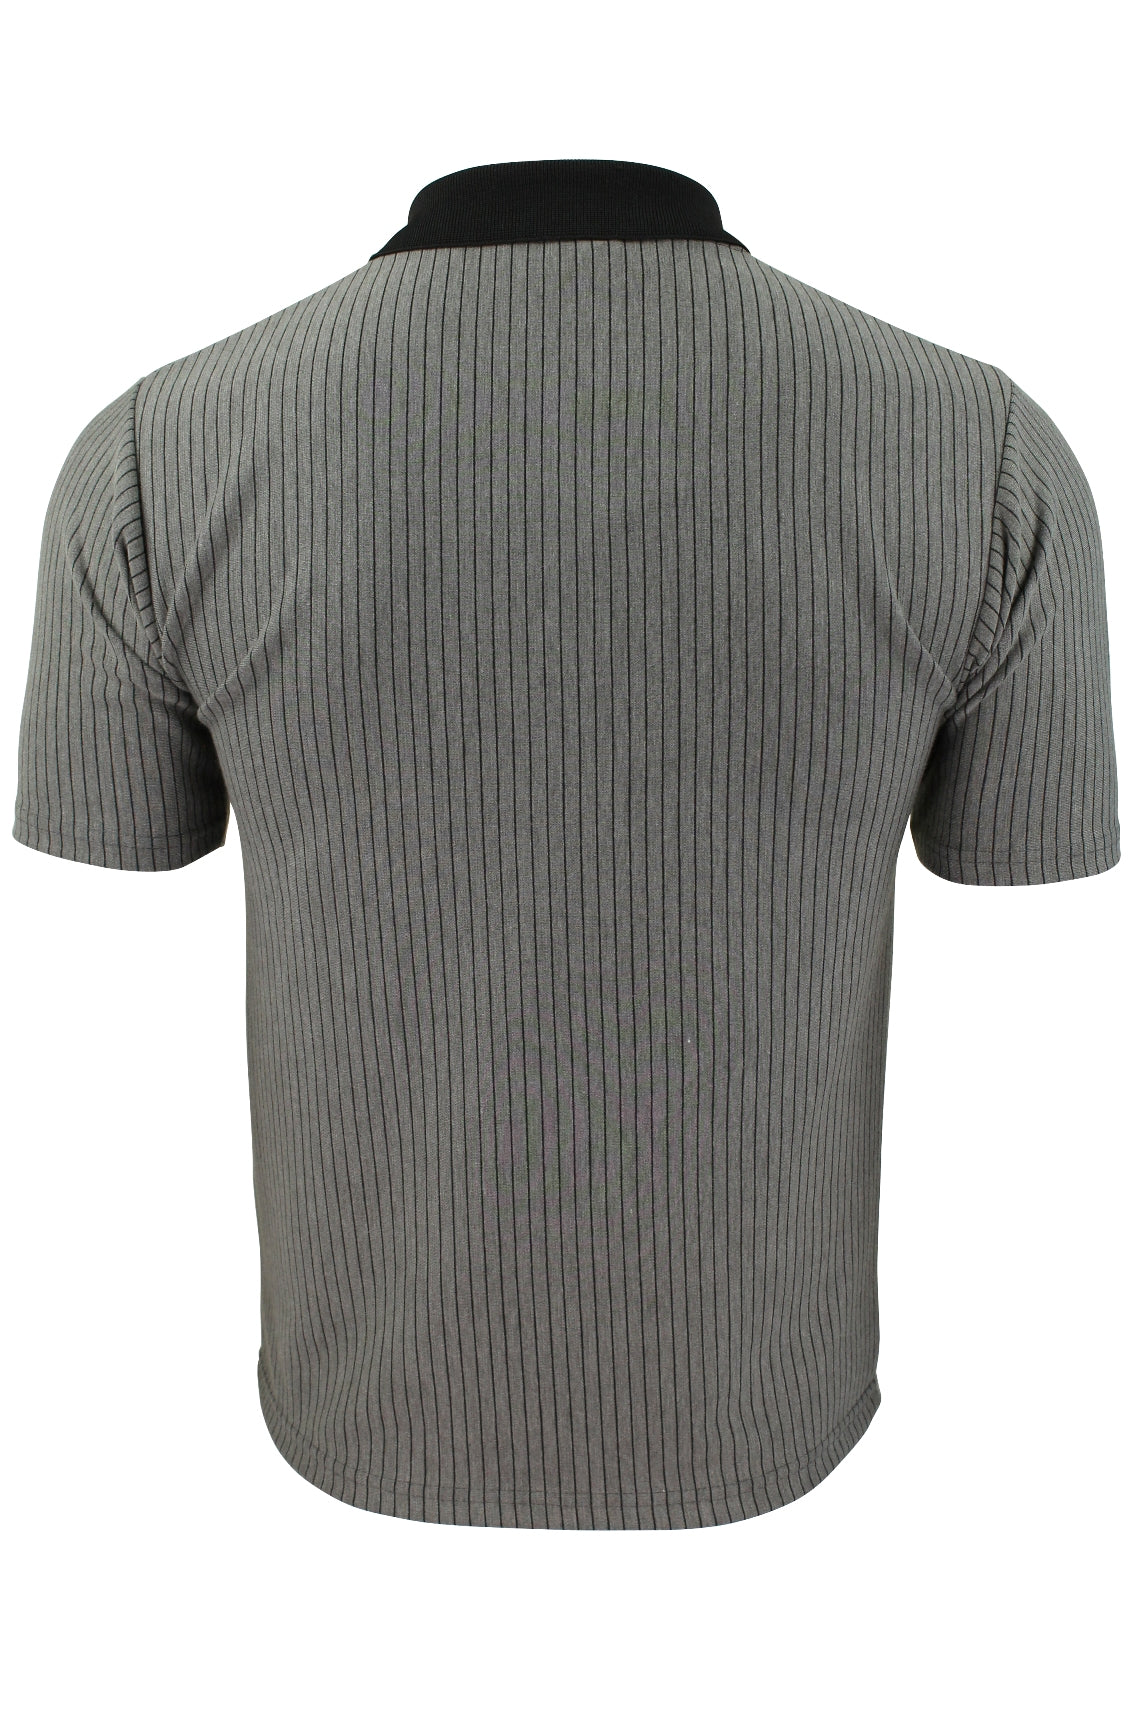 Mens Stripe Polo Shirt by Xact Clothing Short Sleeved, 03, X-03, Grey